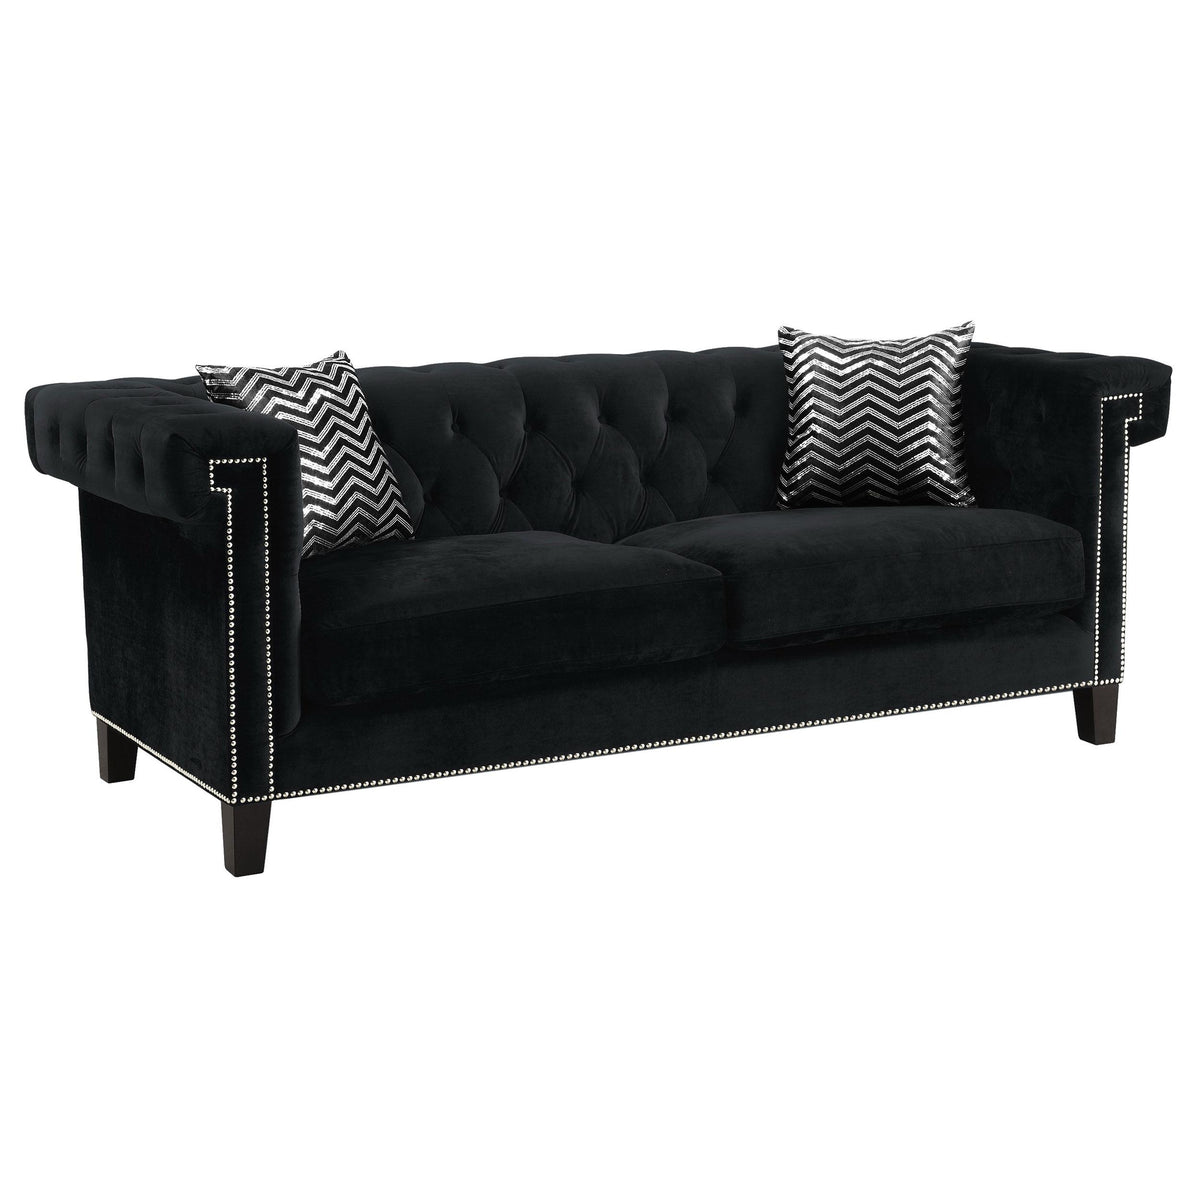 Reventlow Tufted Sofa Black Reventlow Tufted Sofa Black Half Price Furniture